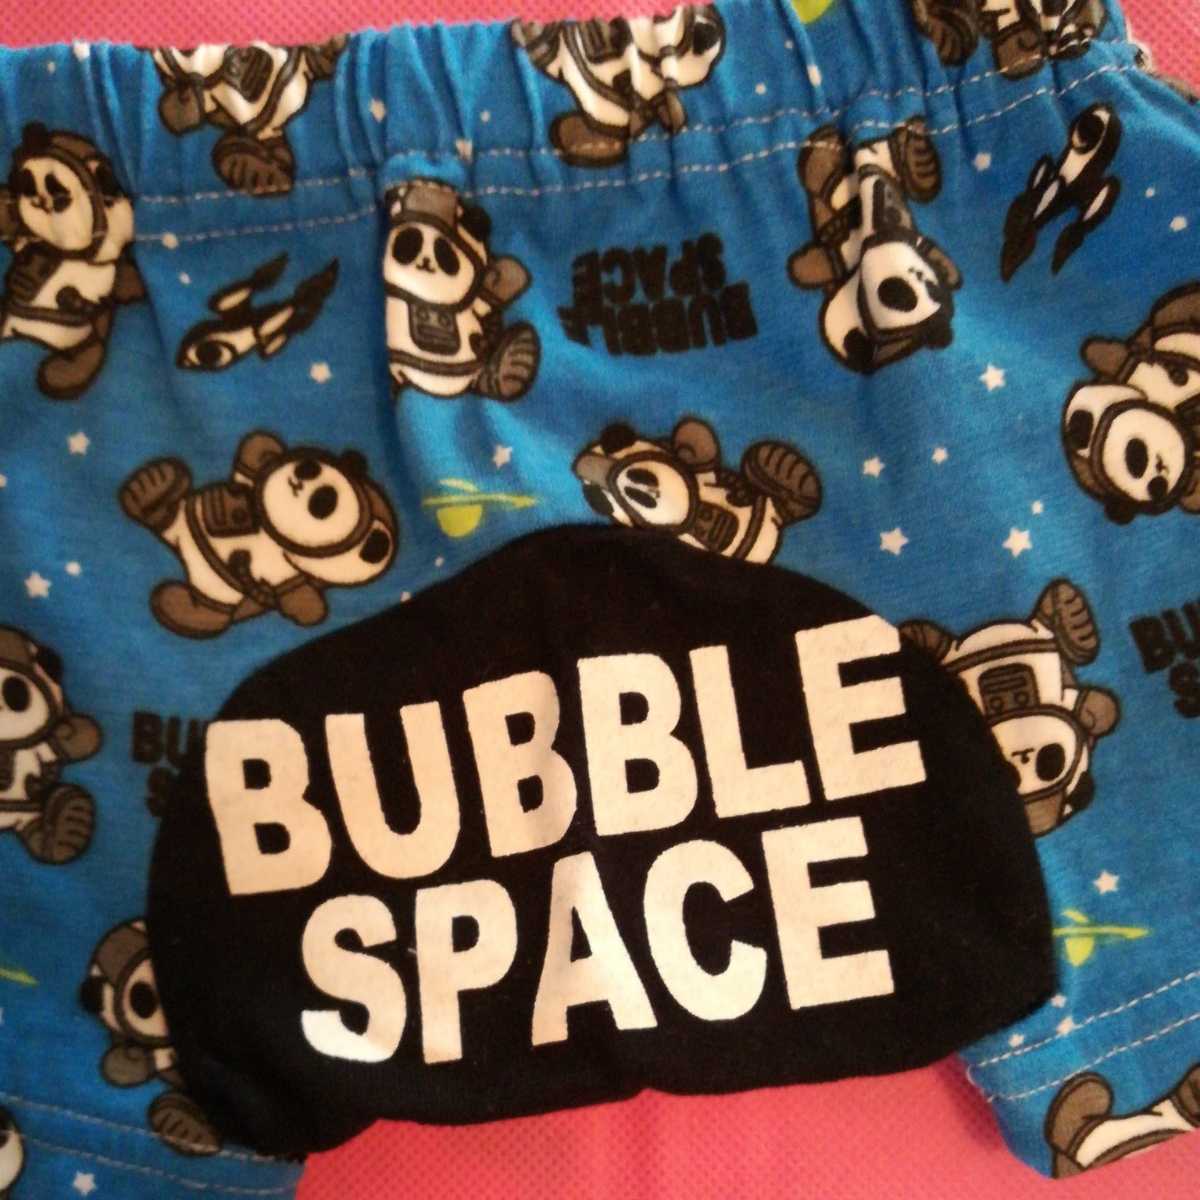  baby short pants 70 Panda cosmos pattern blue used 